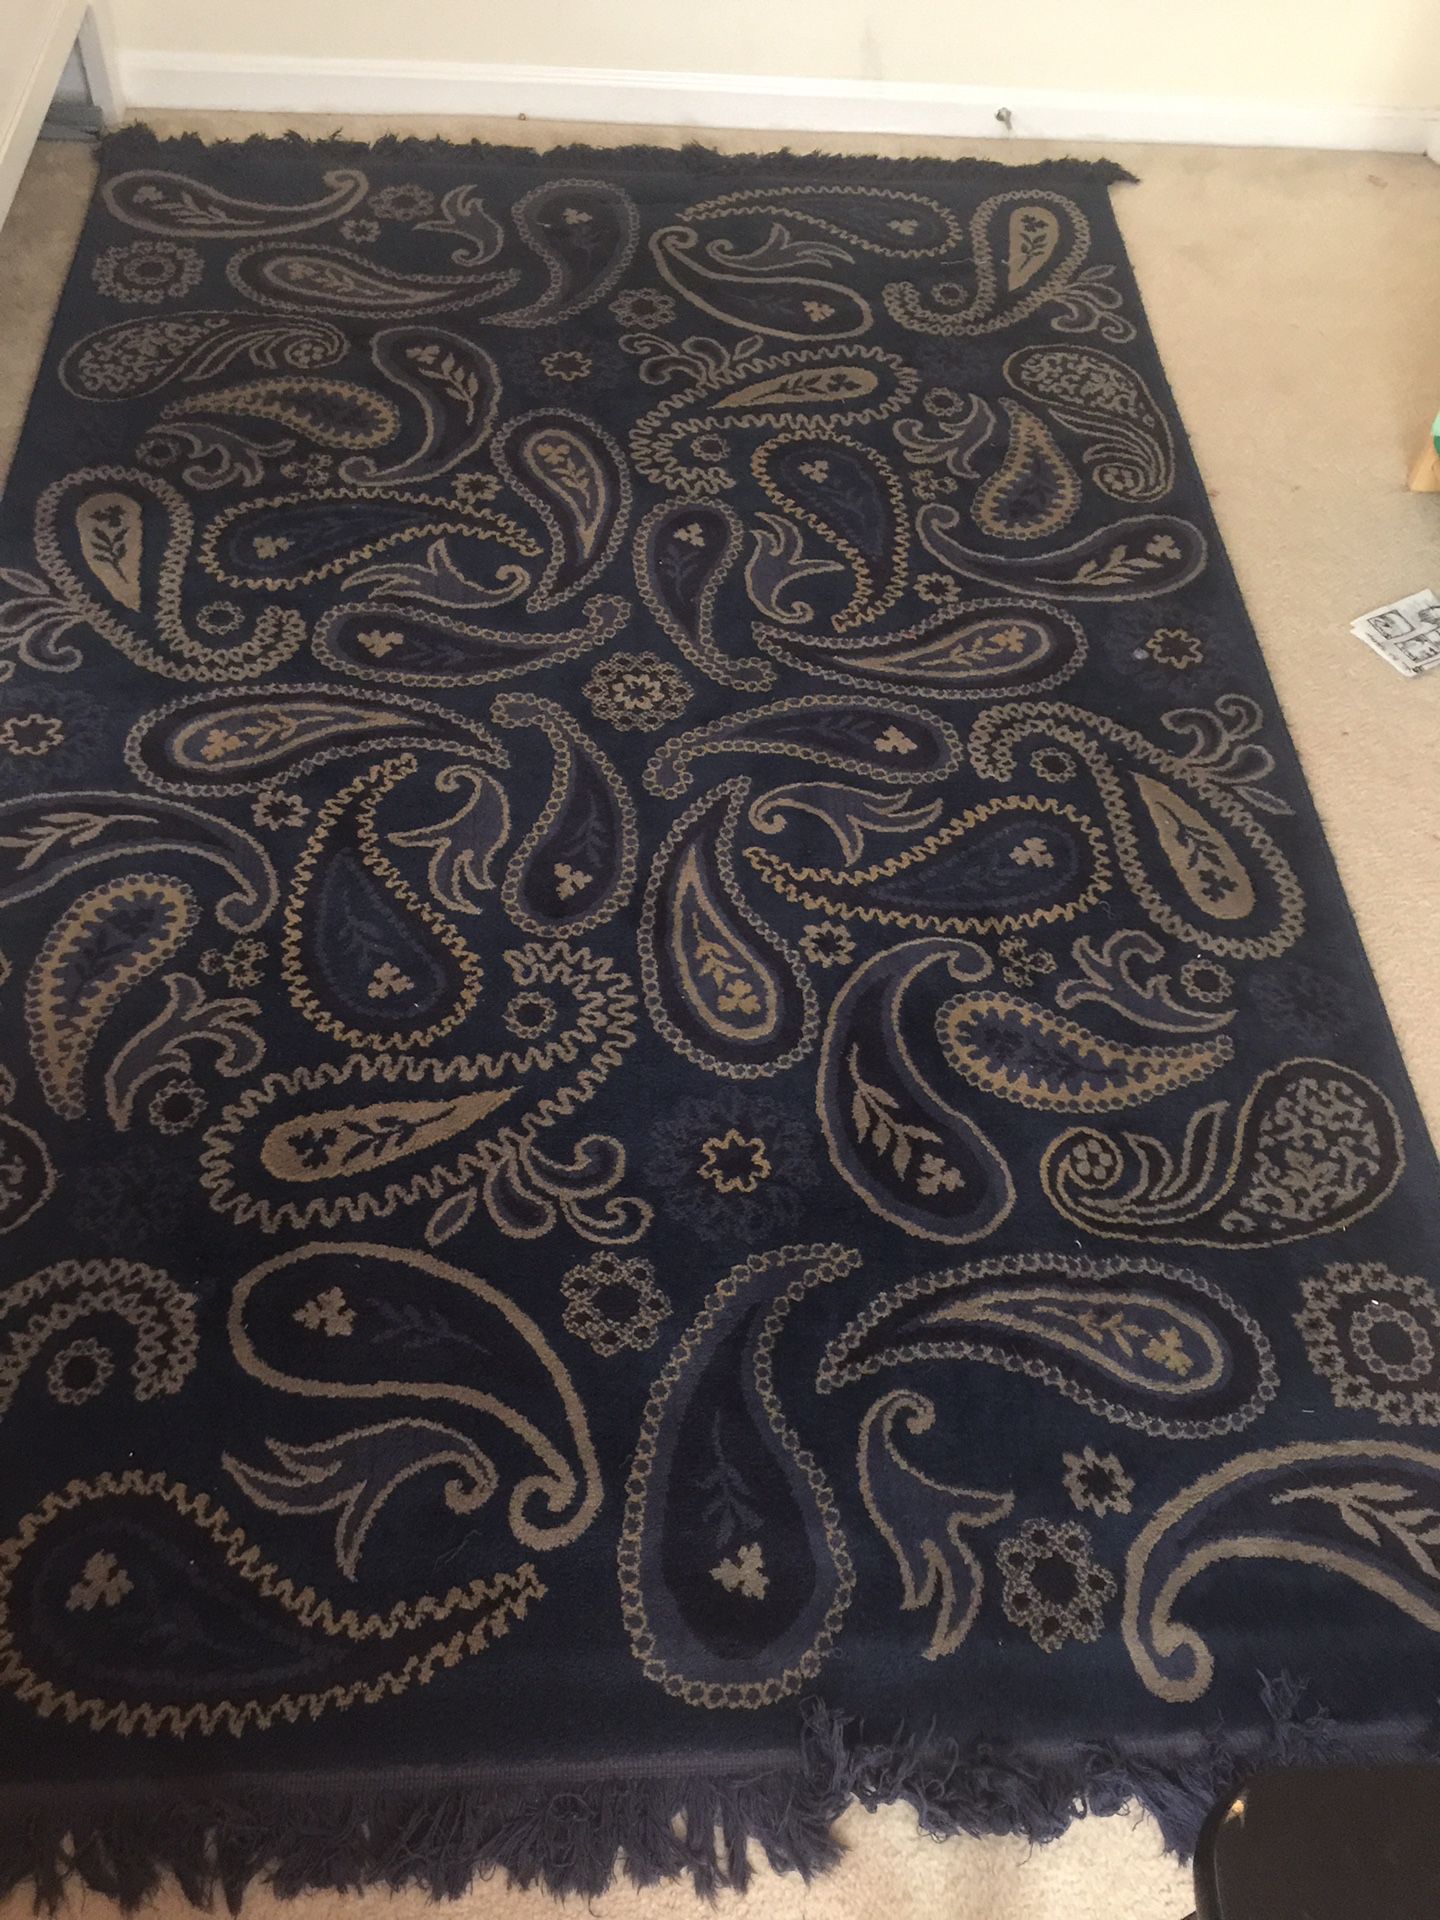 2 dark blue rugs each $30